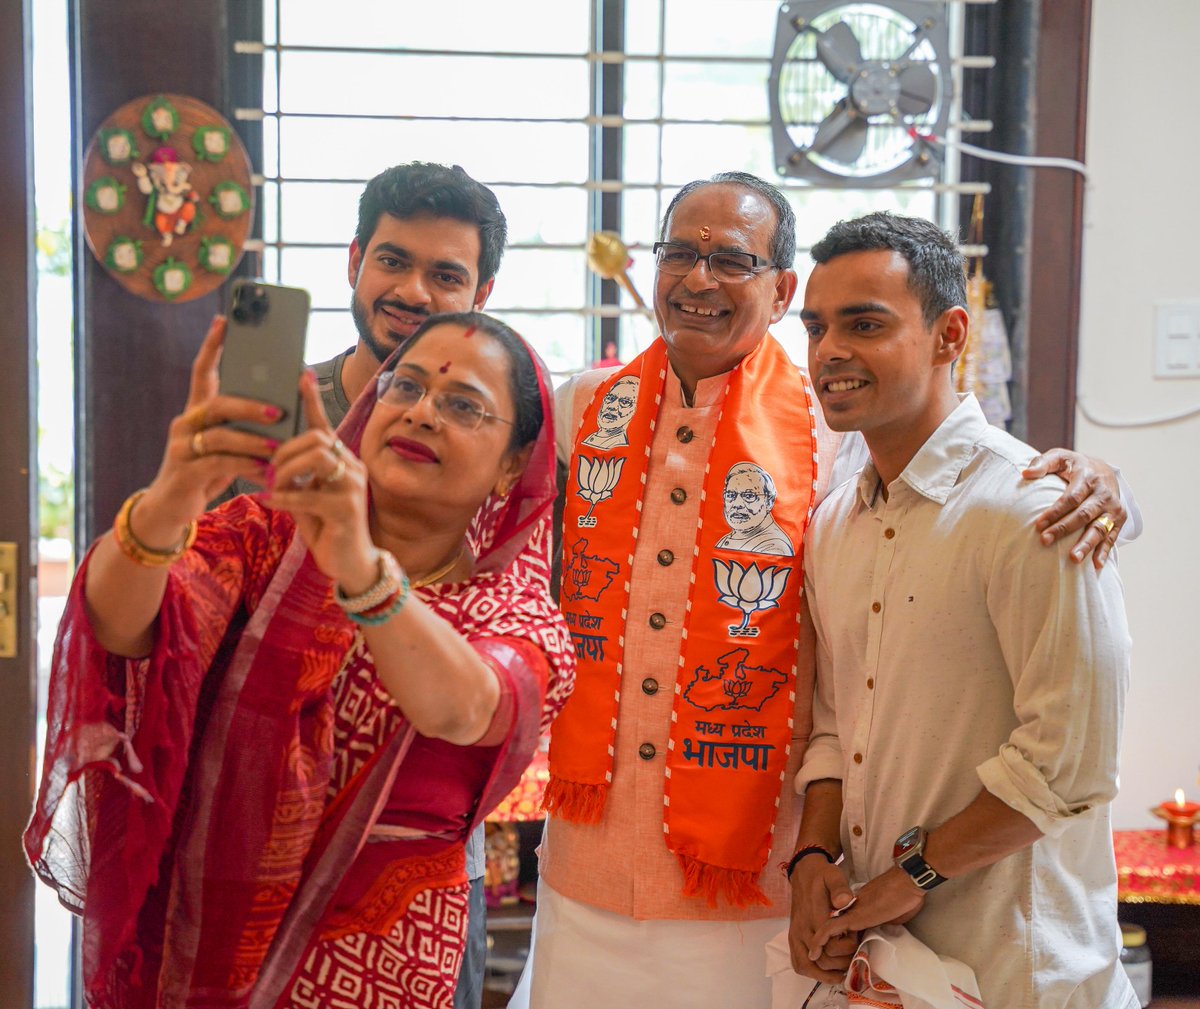 Selfie of the day
.
.
#ShivrajSinghChouhan #AbkiBaar400Paar #LokSabhaElections2024 #Shivraj #मध्यप्रदेश #MadhyaPradesh #vidisha #raisen #MamaKaNamankan #ShivrajKaTufan @ChouhanShivraj #ElectionDay #Vote4INDIA #Vote_for_BJP